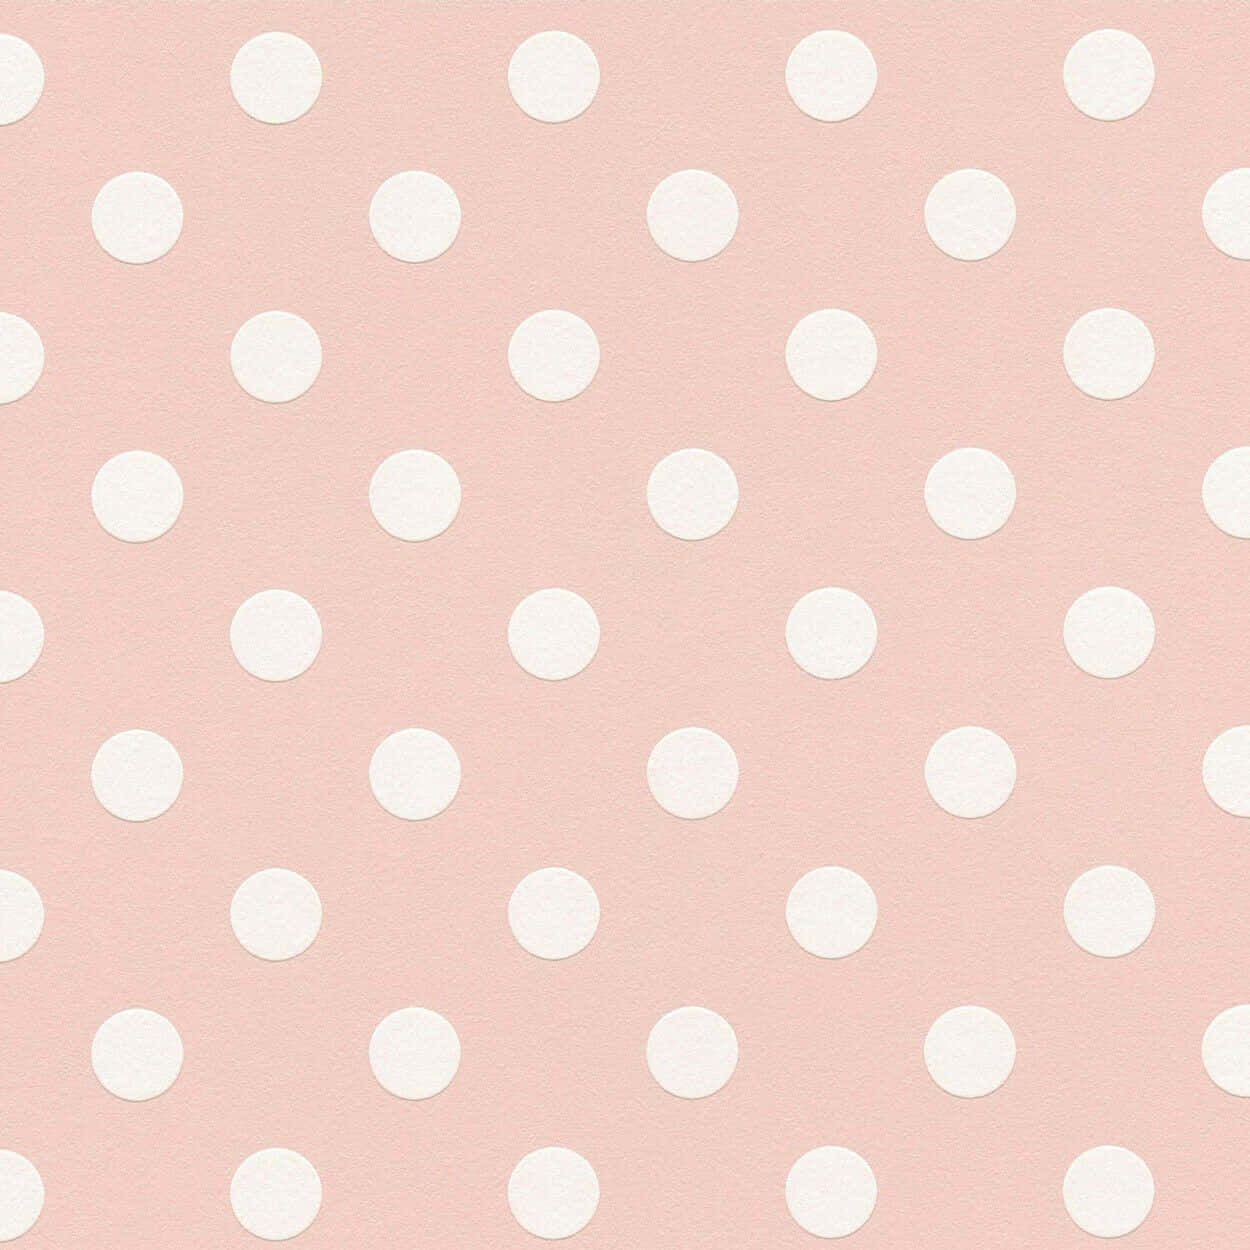 Delightful Pink and White Polka Dot pattern Wallpaper